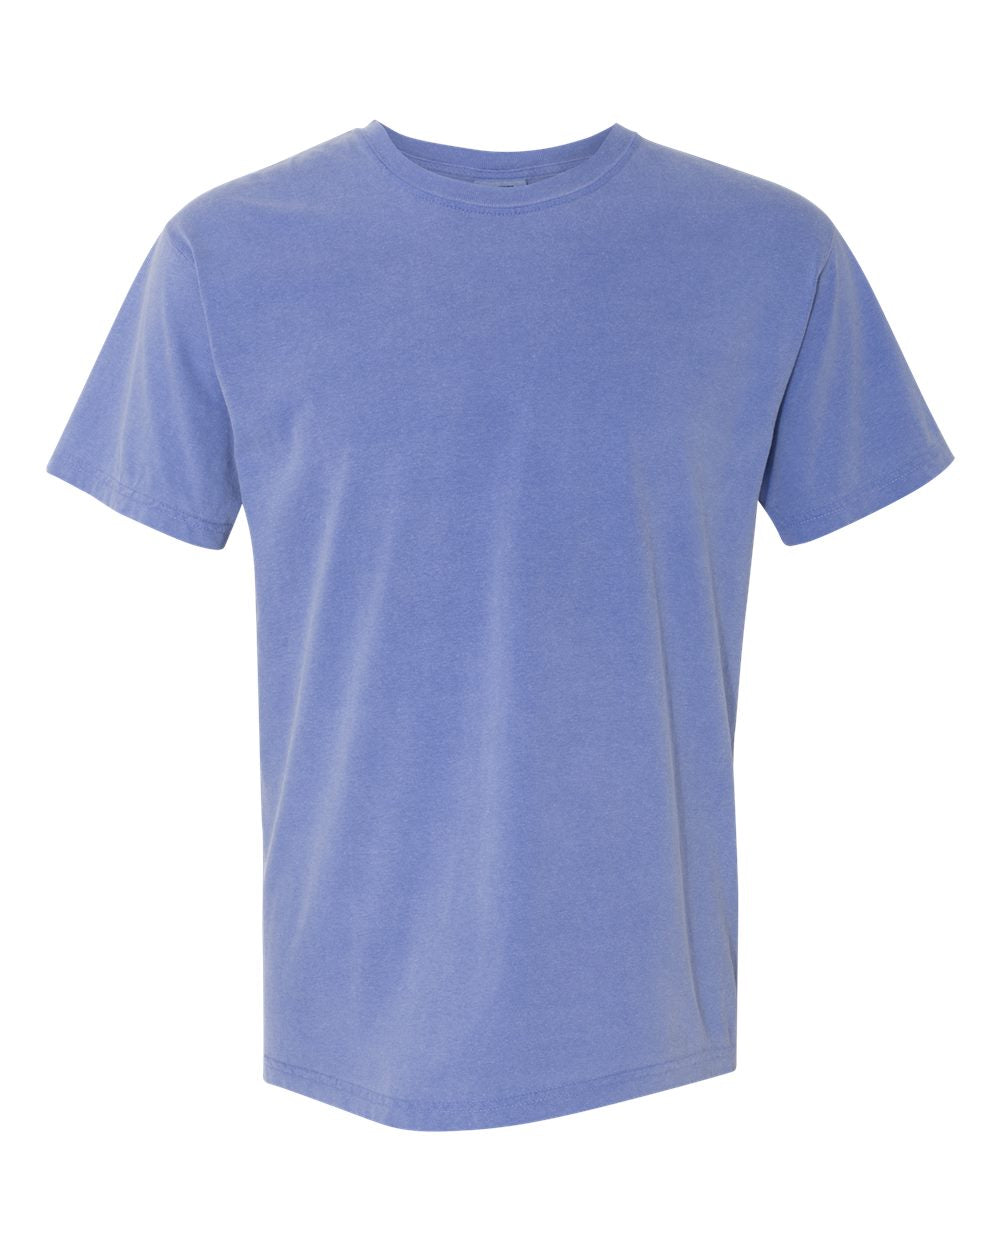 Comfort Colors Heavyweight T-Shirt Size 4XLarge